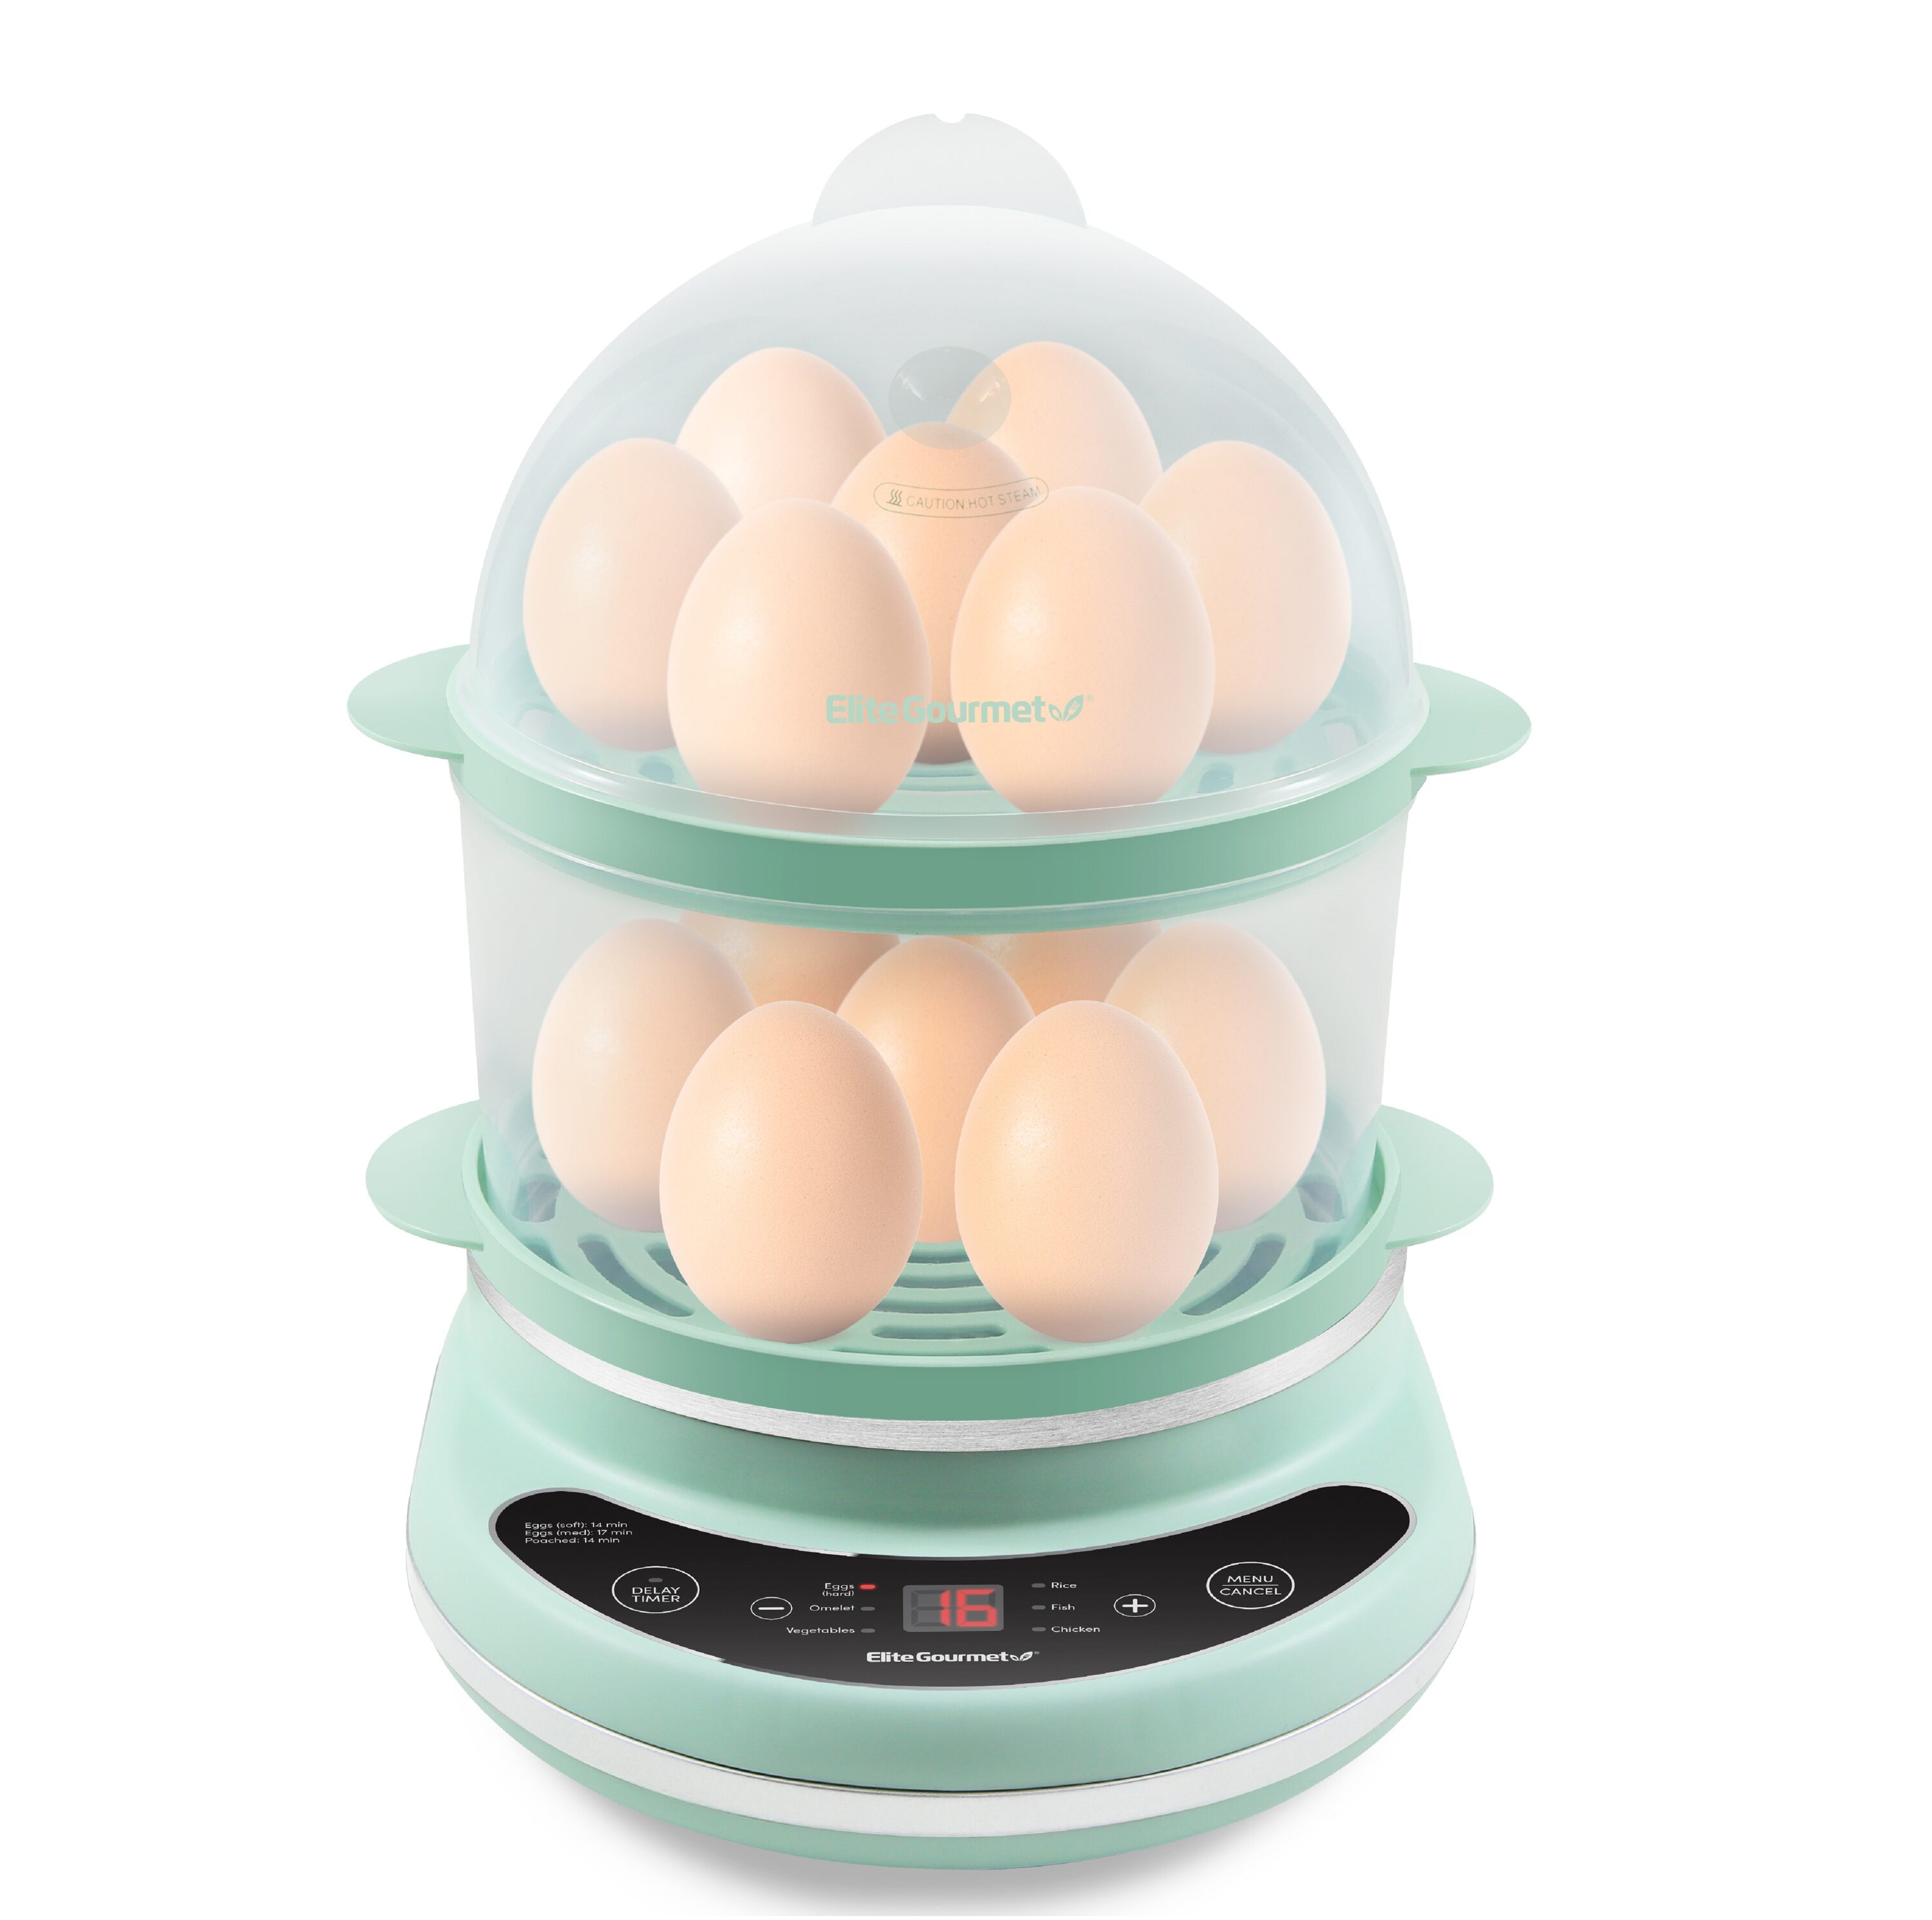 Chefman - Electric Egg Cooker + Boiler, Quickly Makes 6 Eggs, BPA-Free - Black